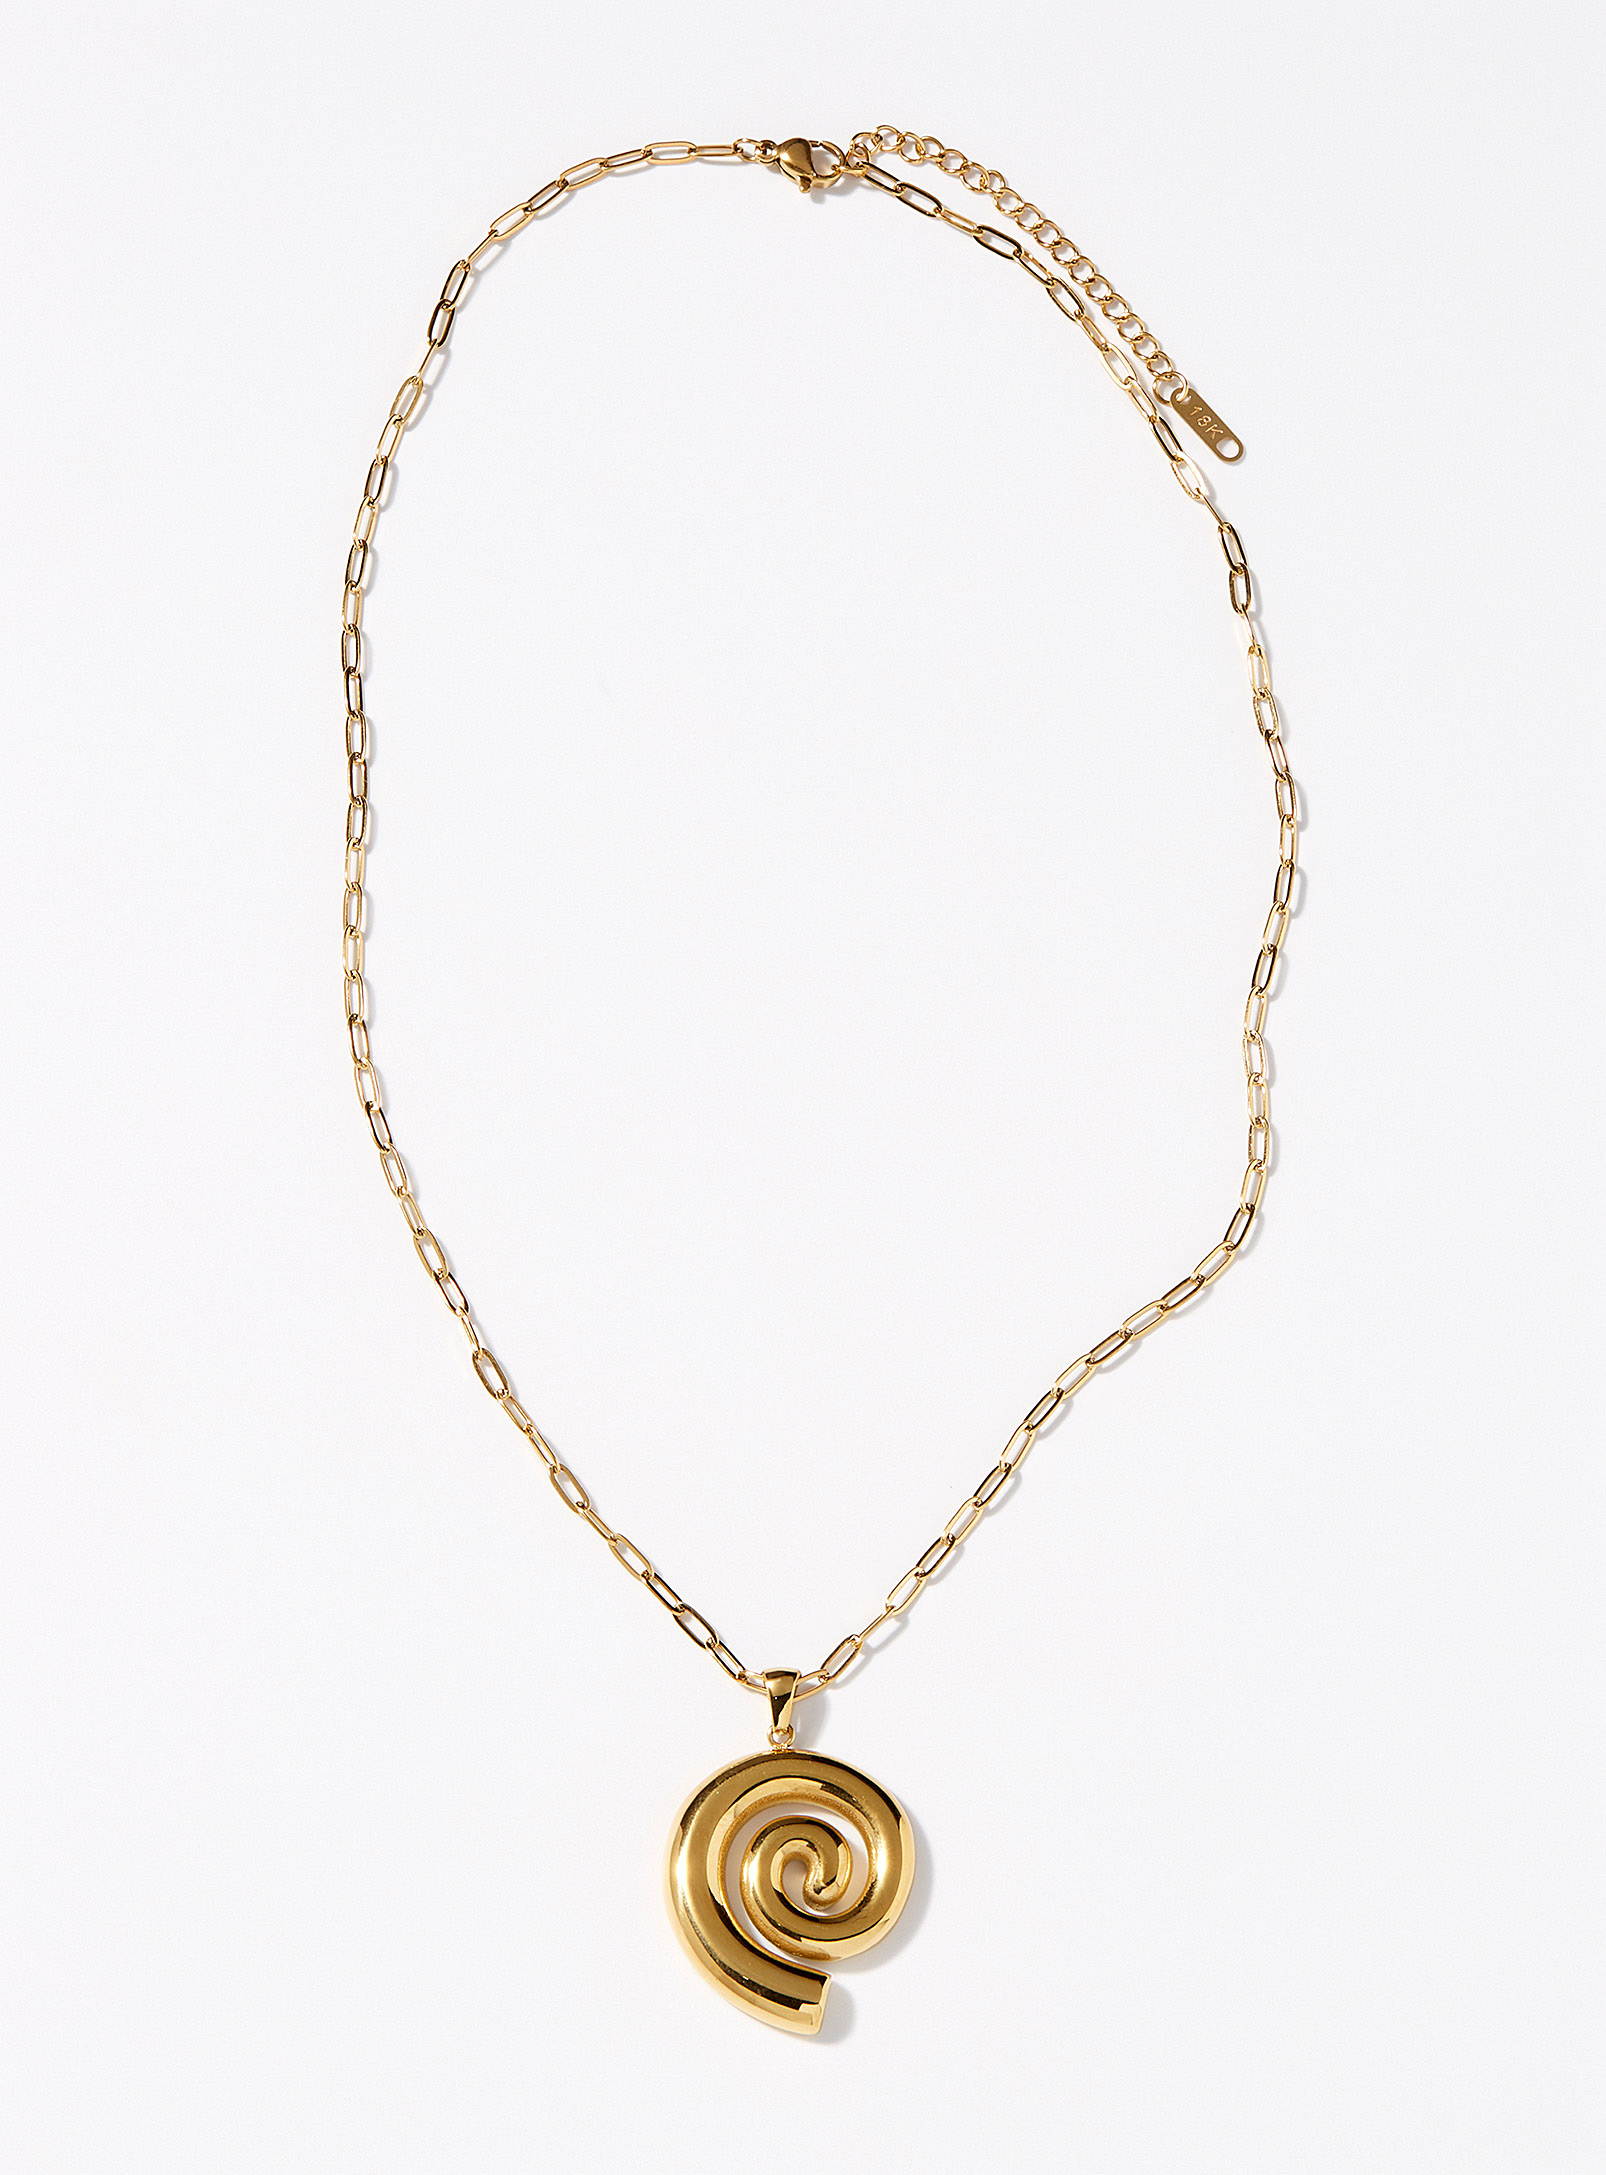 Simons - Women's Golden spiral paperclip chain